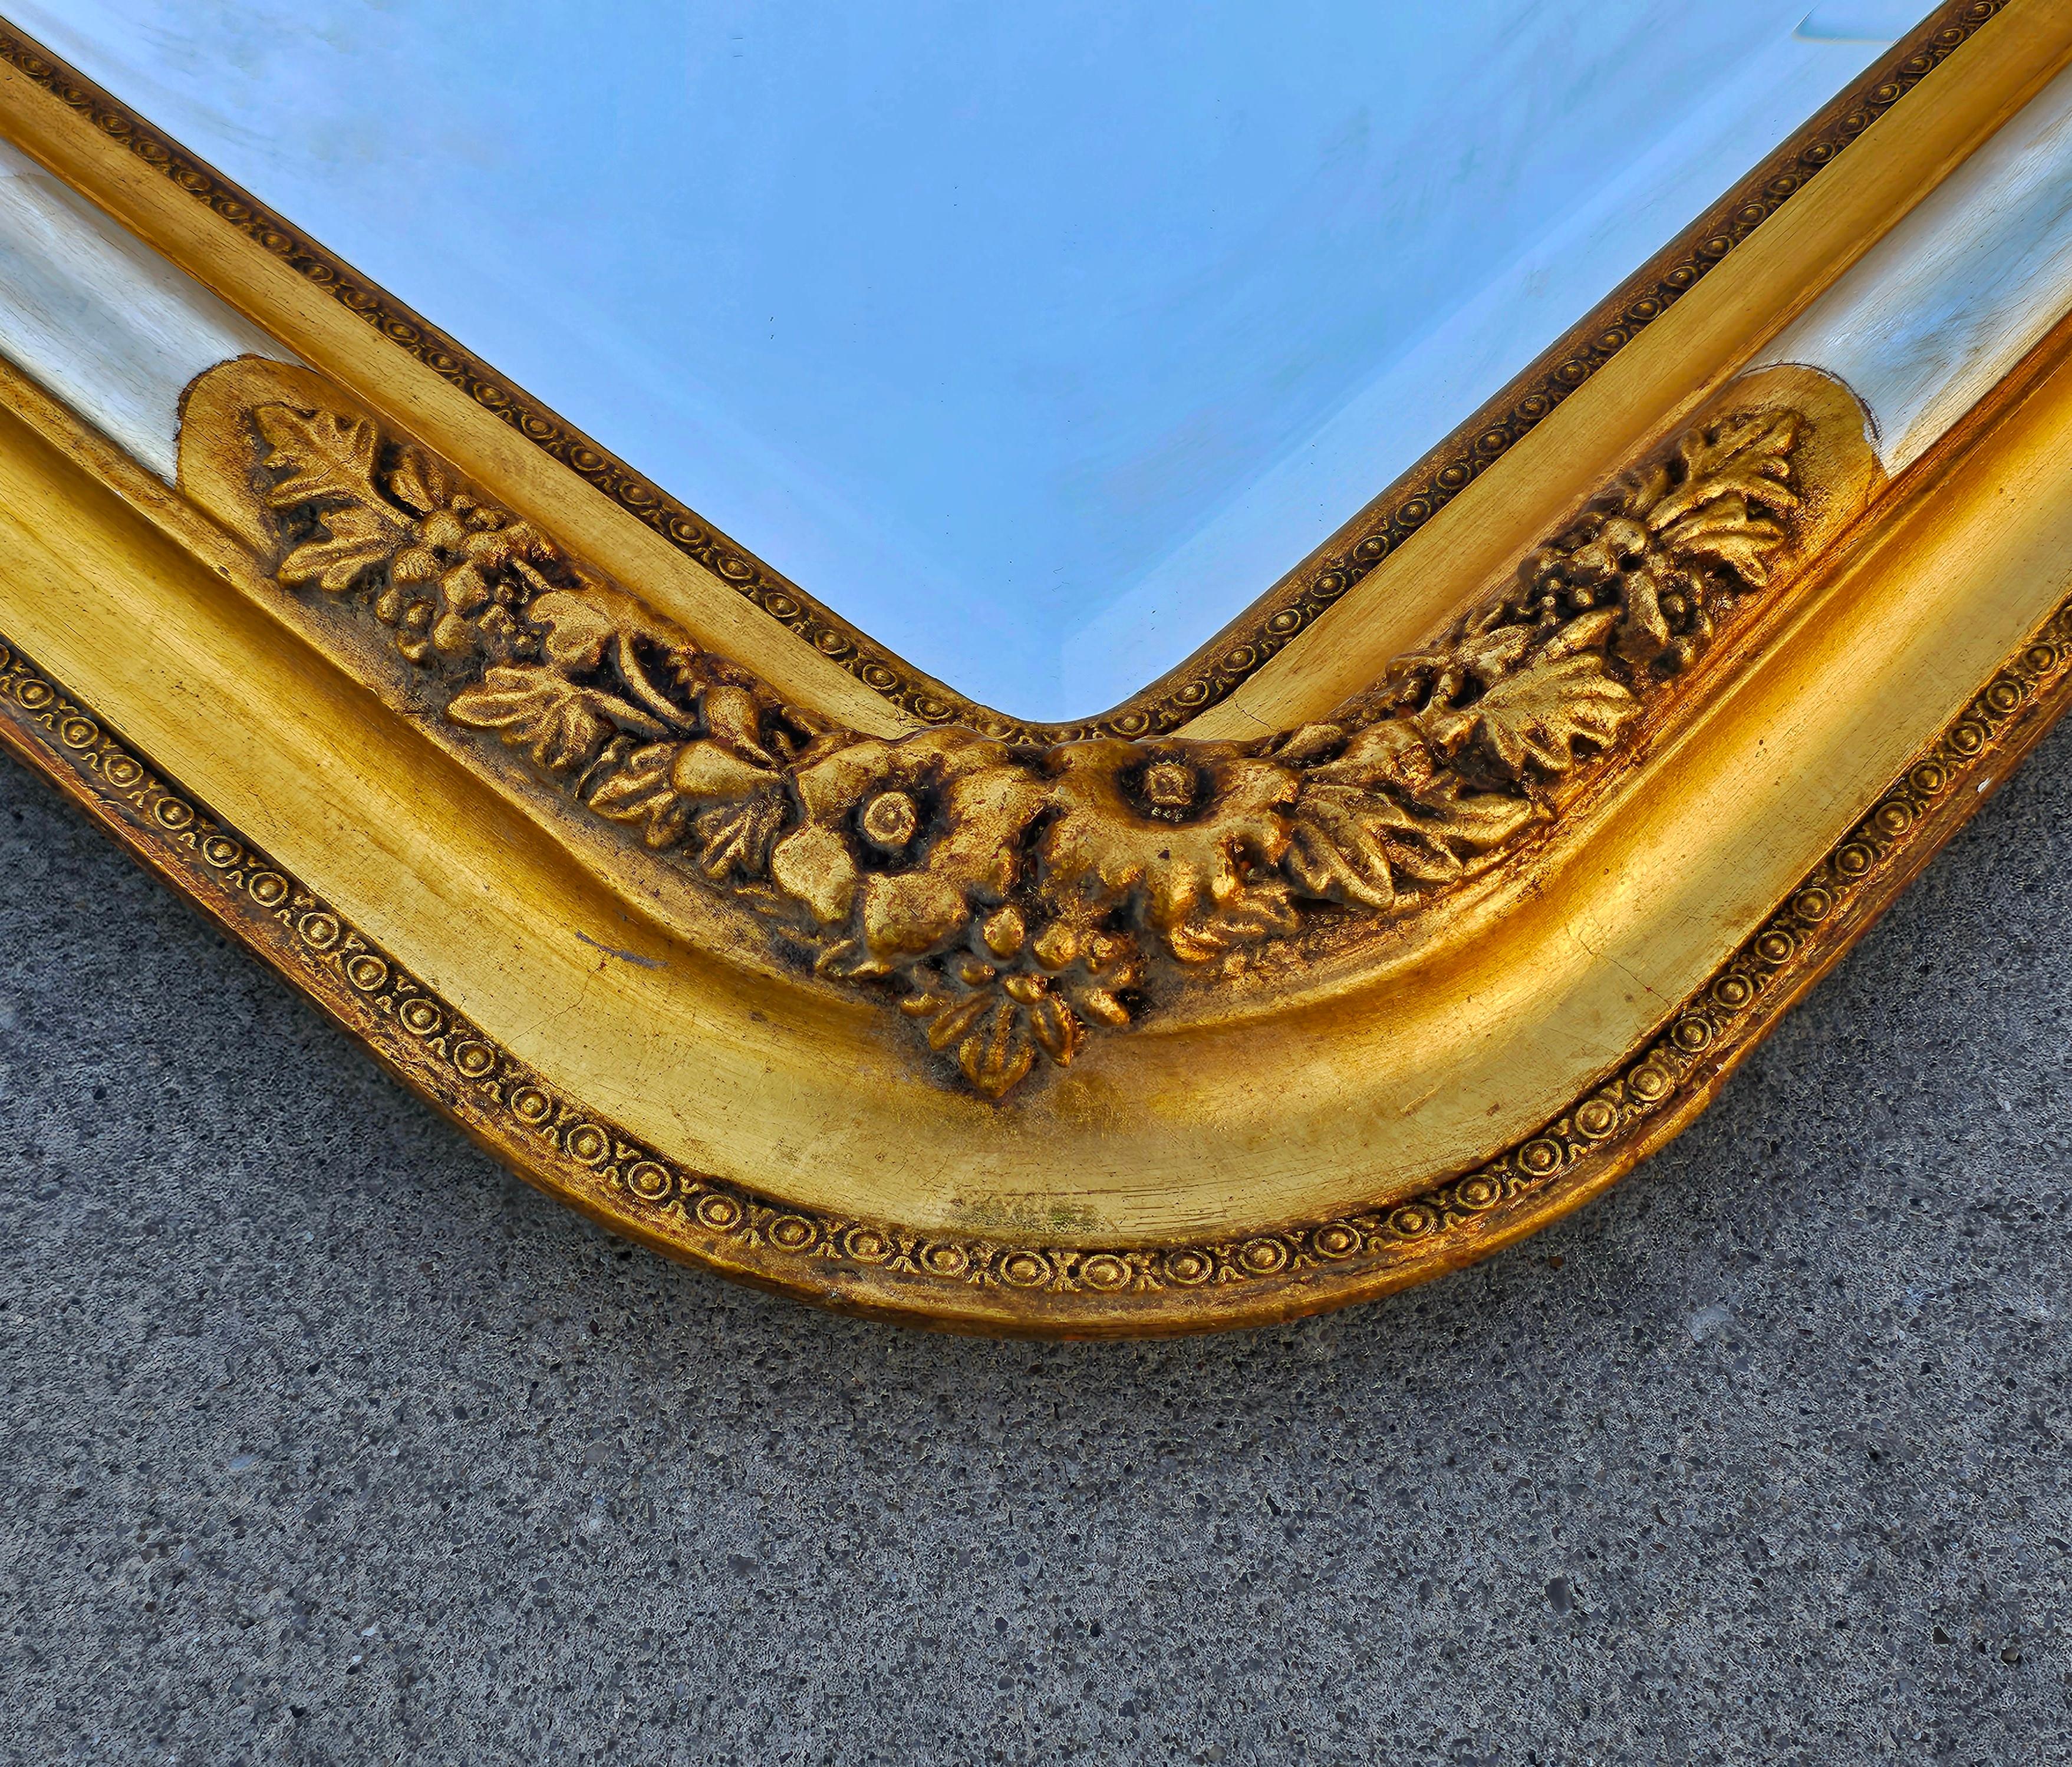 Wood Large and rare Biedermeier Gold Plated Mirror, Austria cca. 1840s